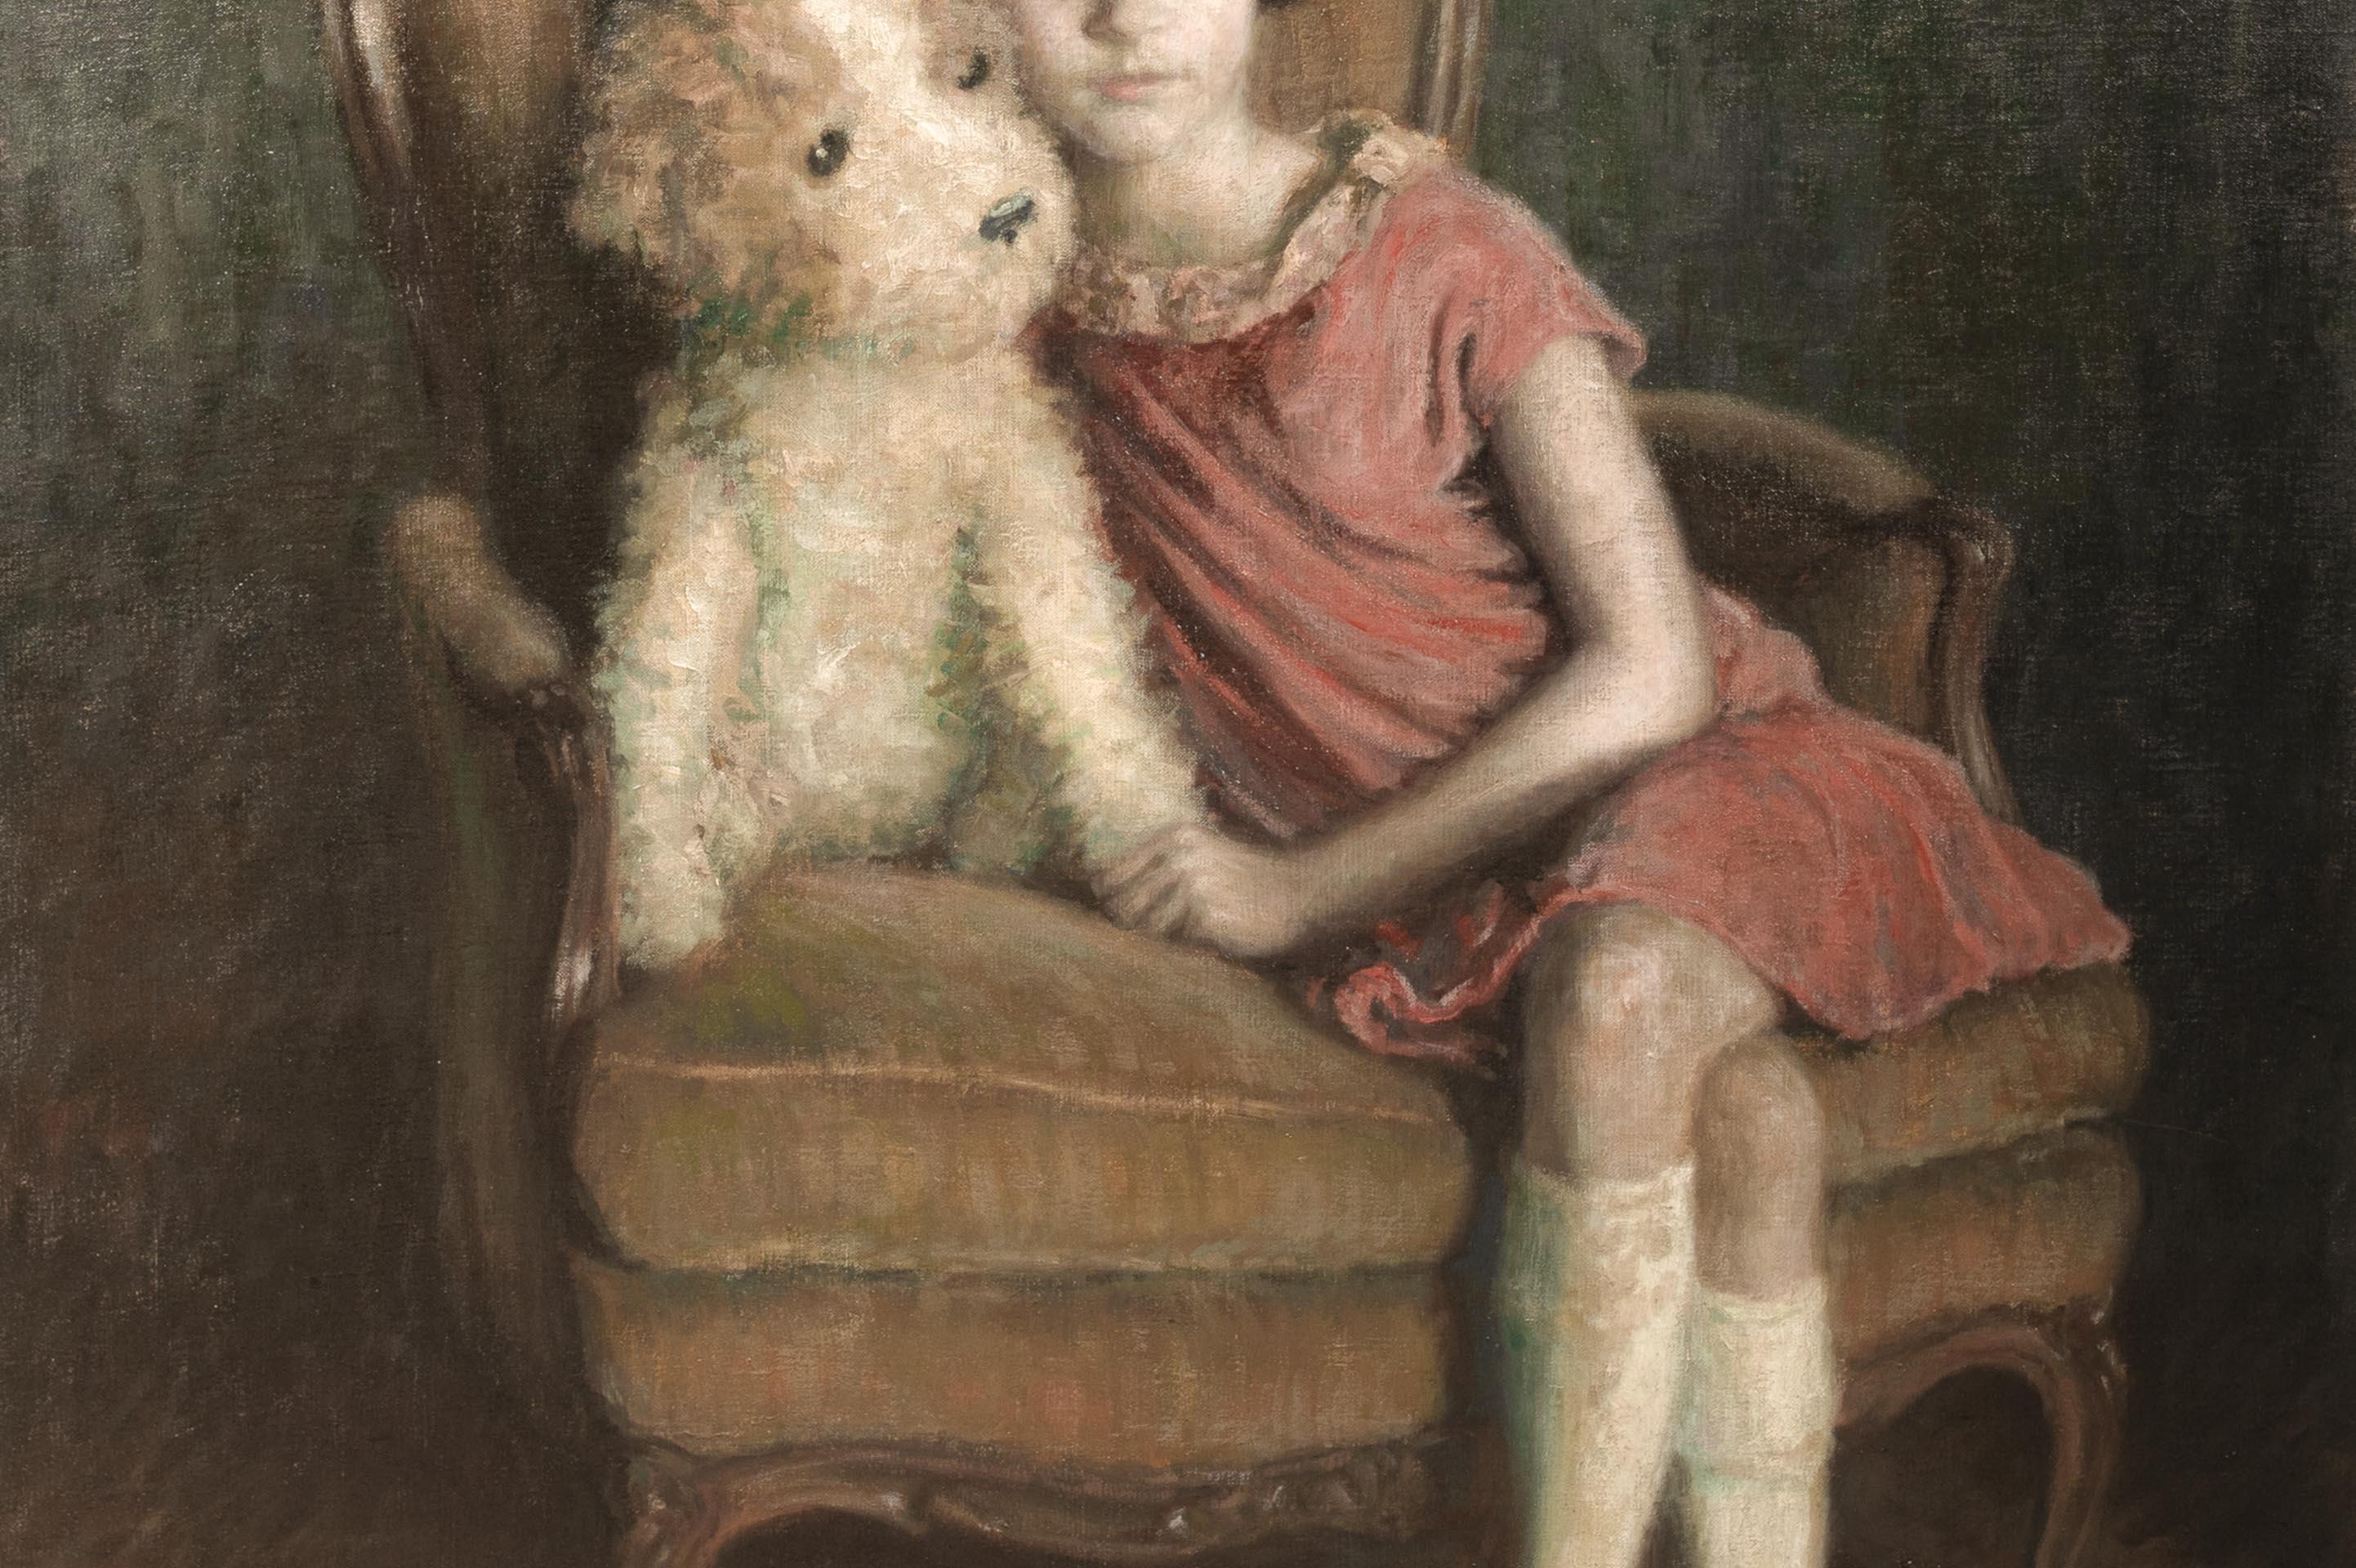 Portrait of A Girl & Toy Bear, dated 1926   by RENE MARIE JOLY DE BEYNAC  For Sale 3